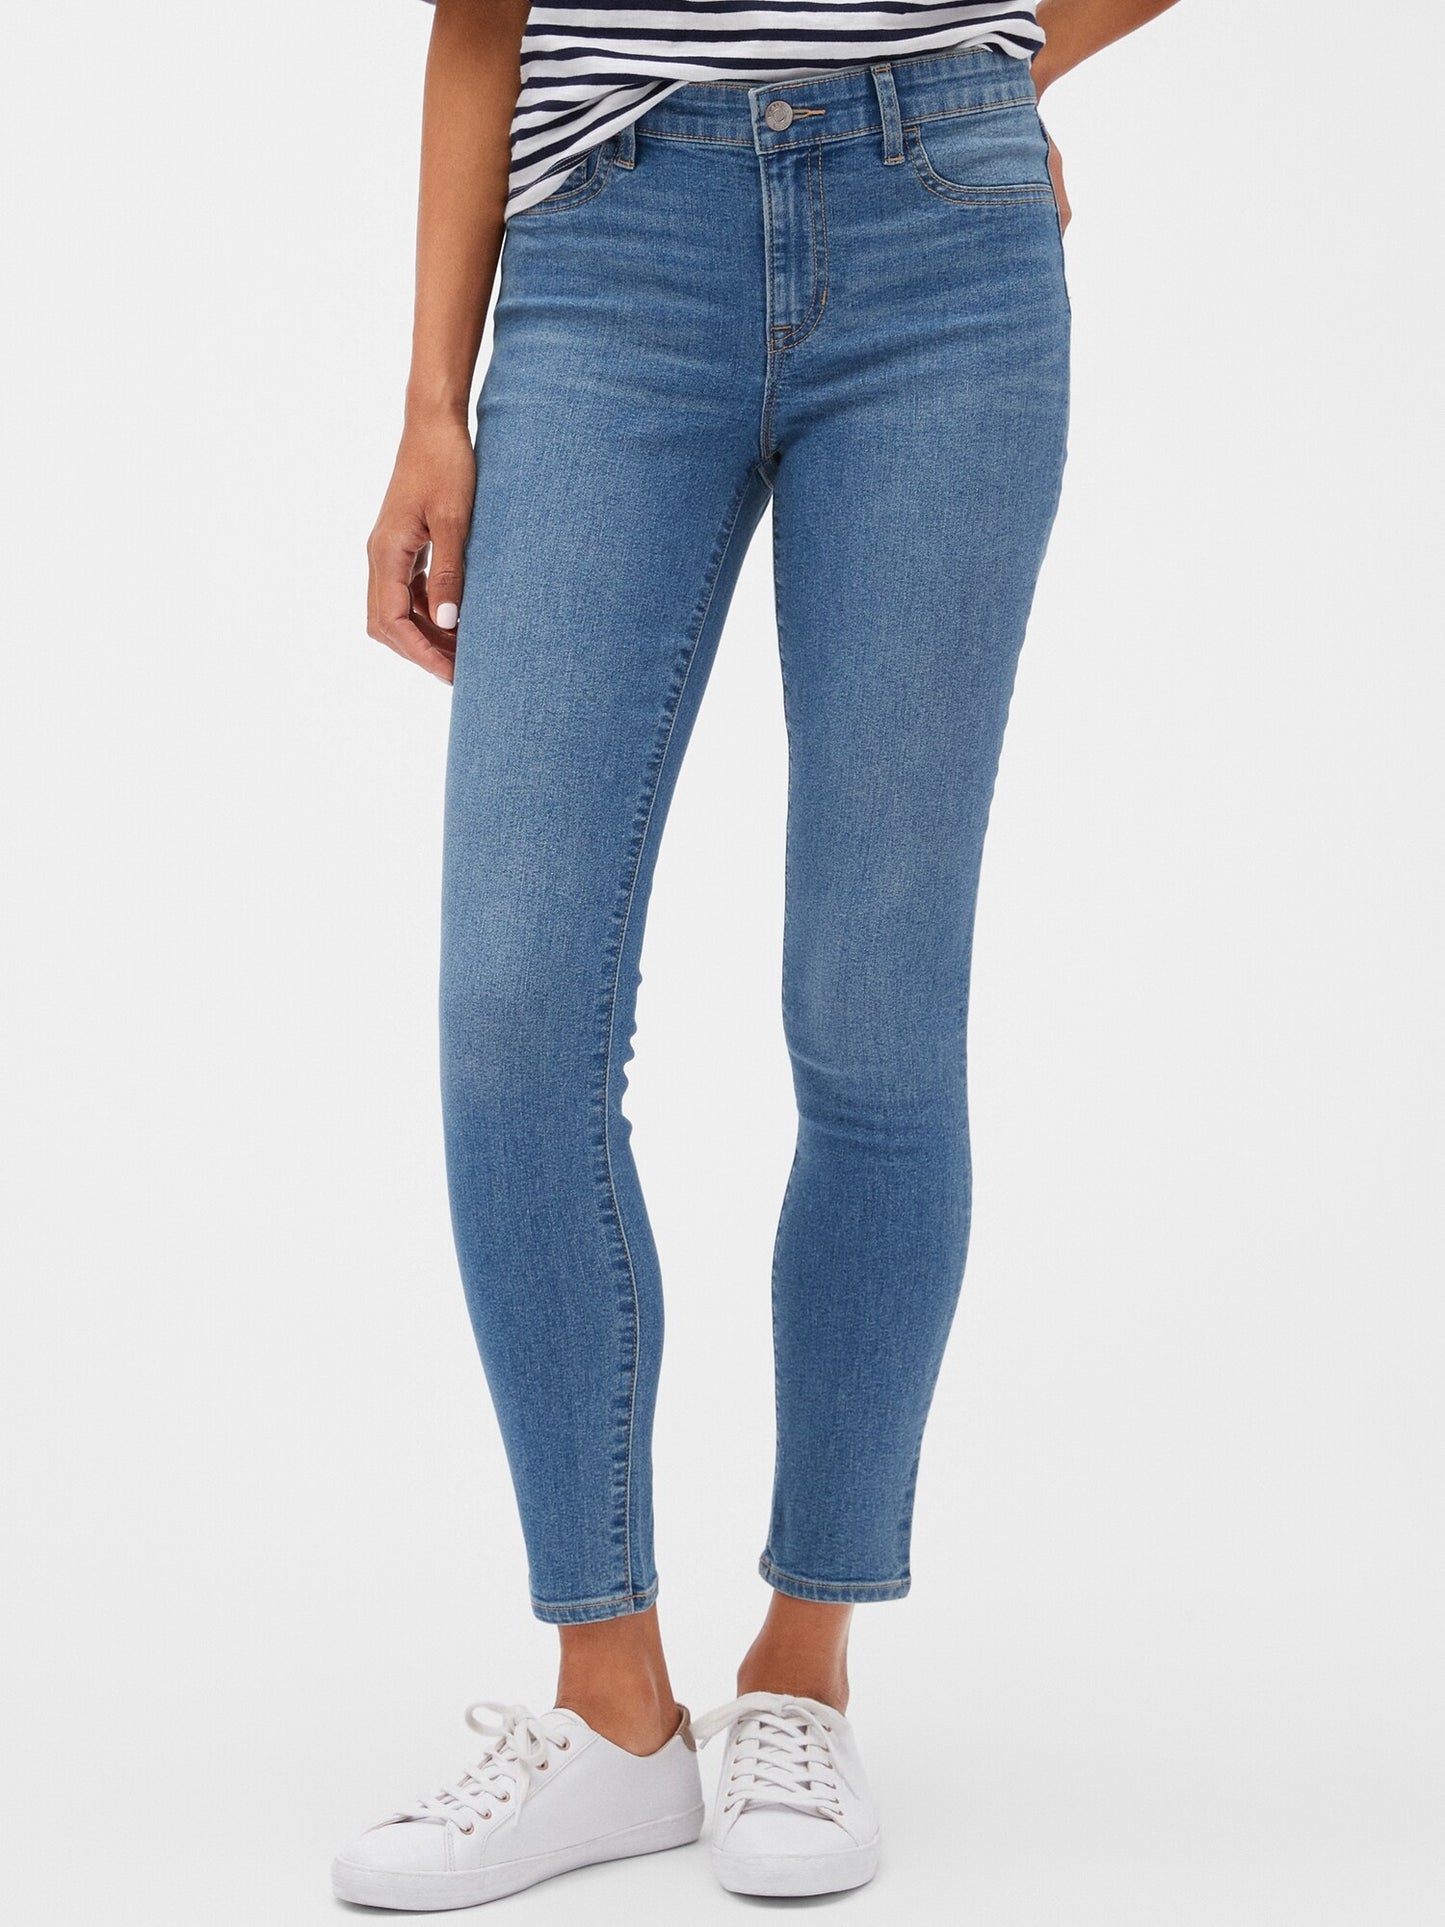 Gap Mid Rise Cropped Favorite Legging Jeans - Indigo